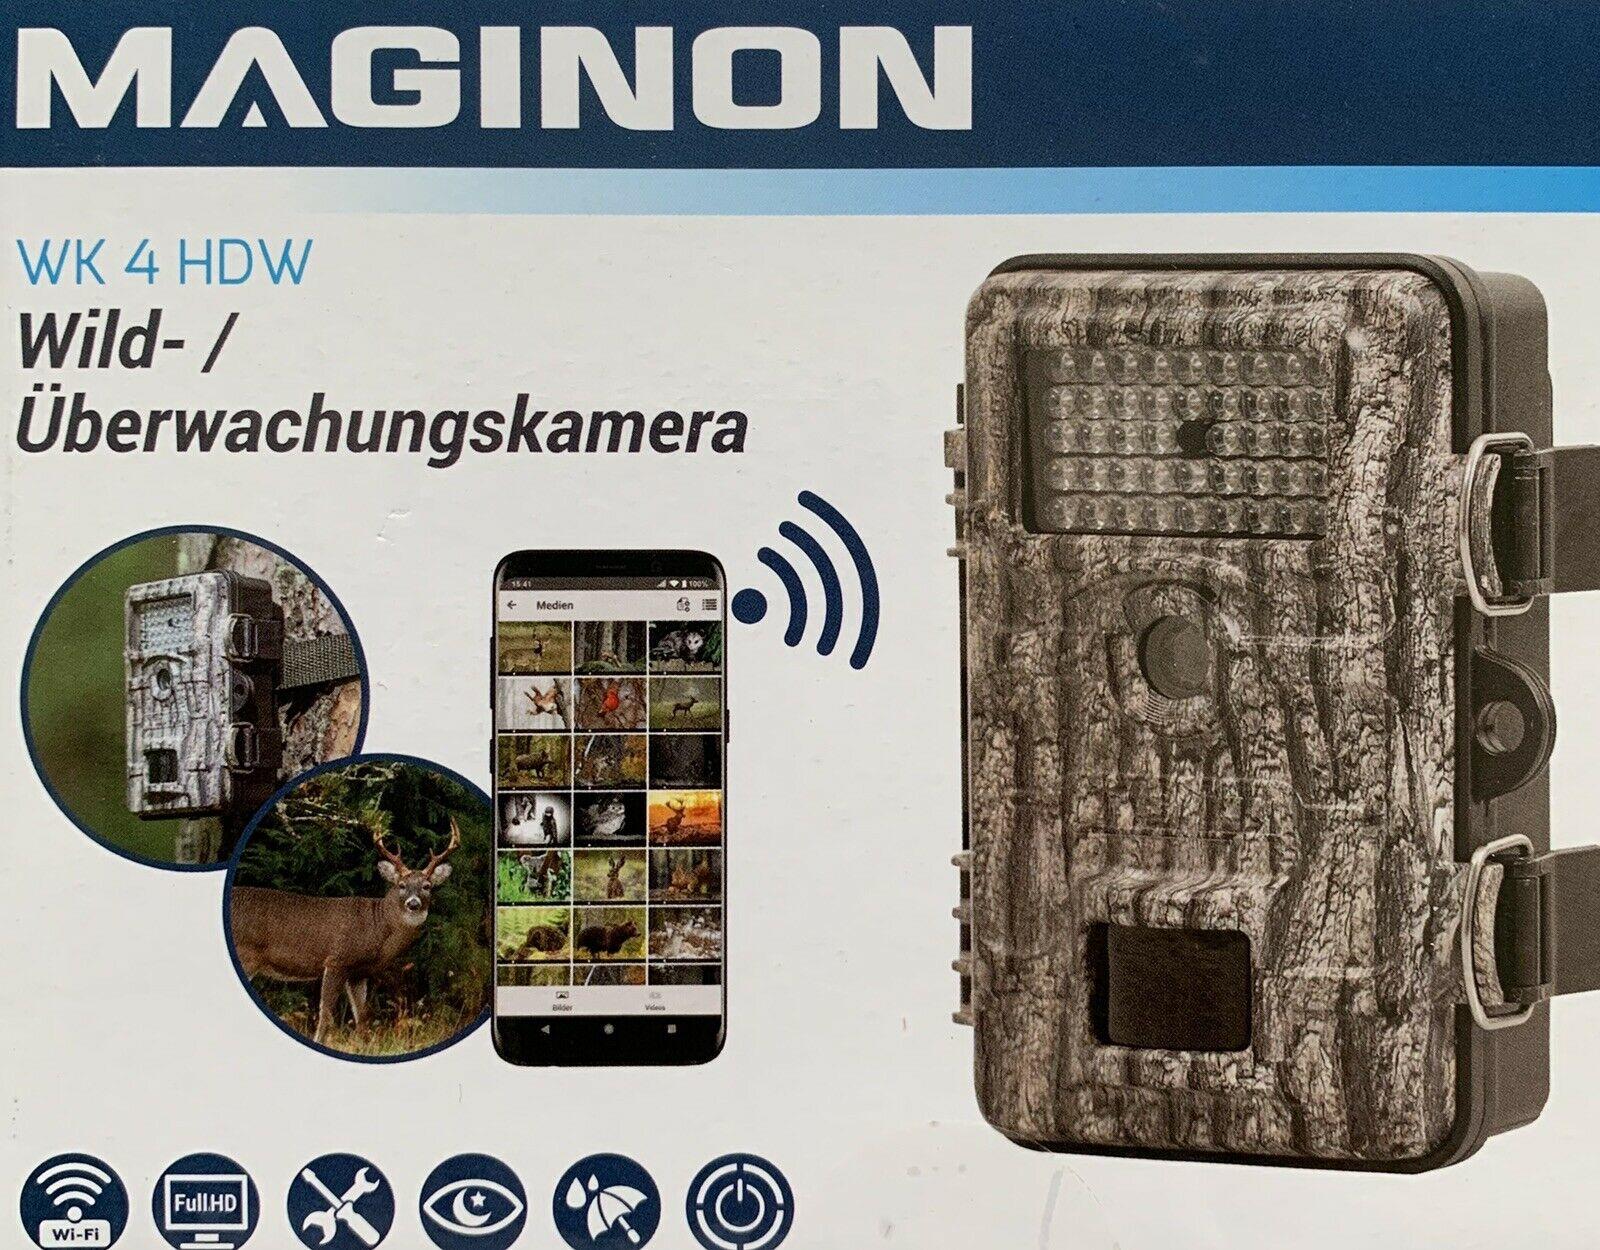 Maginon WK 4 HDW Wildkamera